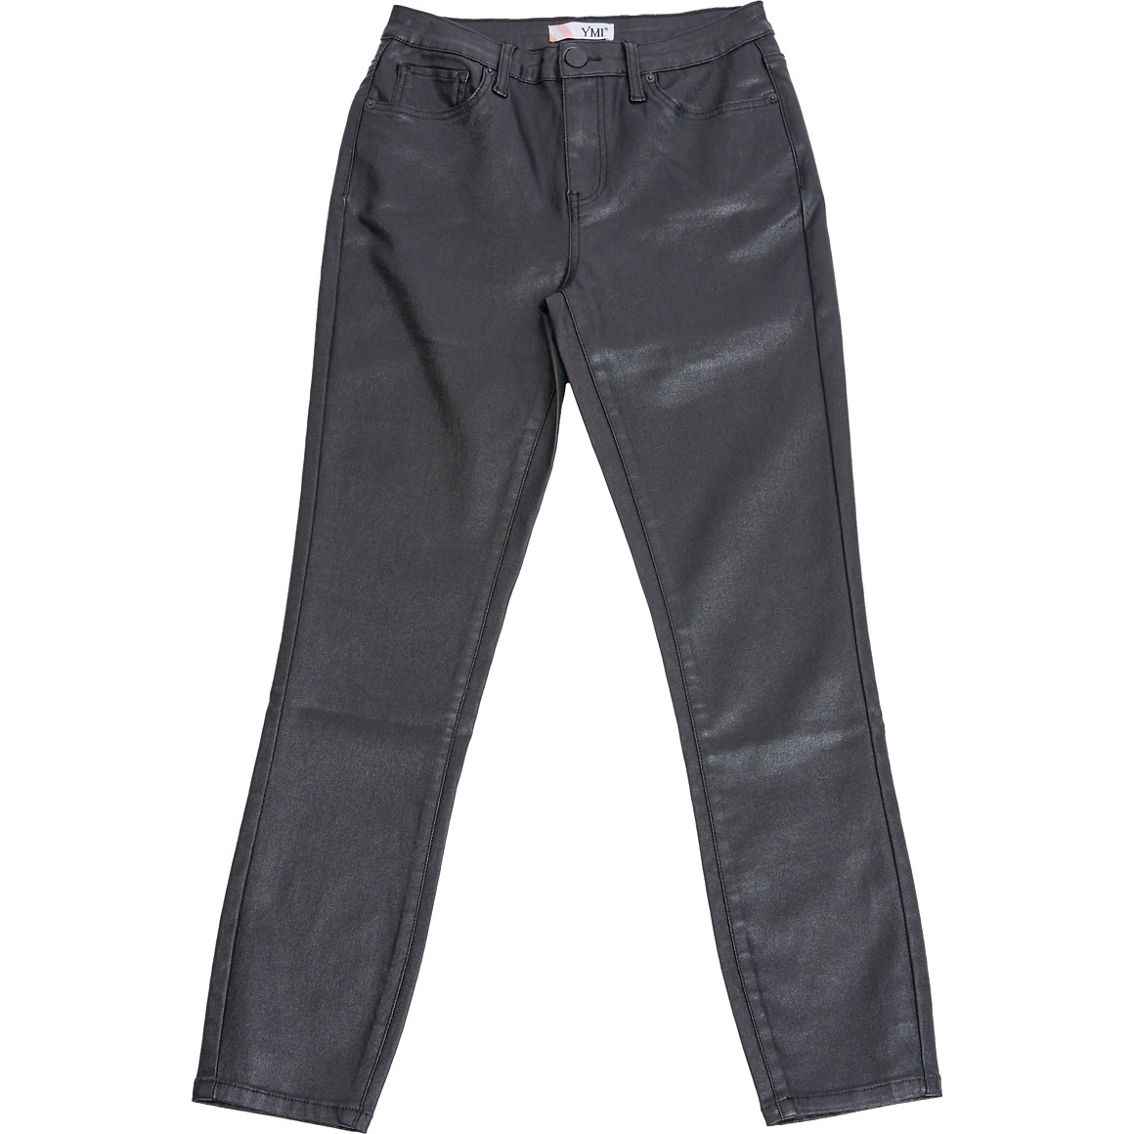 Ymi Jeans Juniors Skinny Metallic Jeans | Jeans | Clothing ...